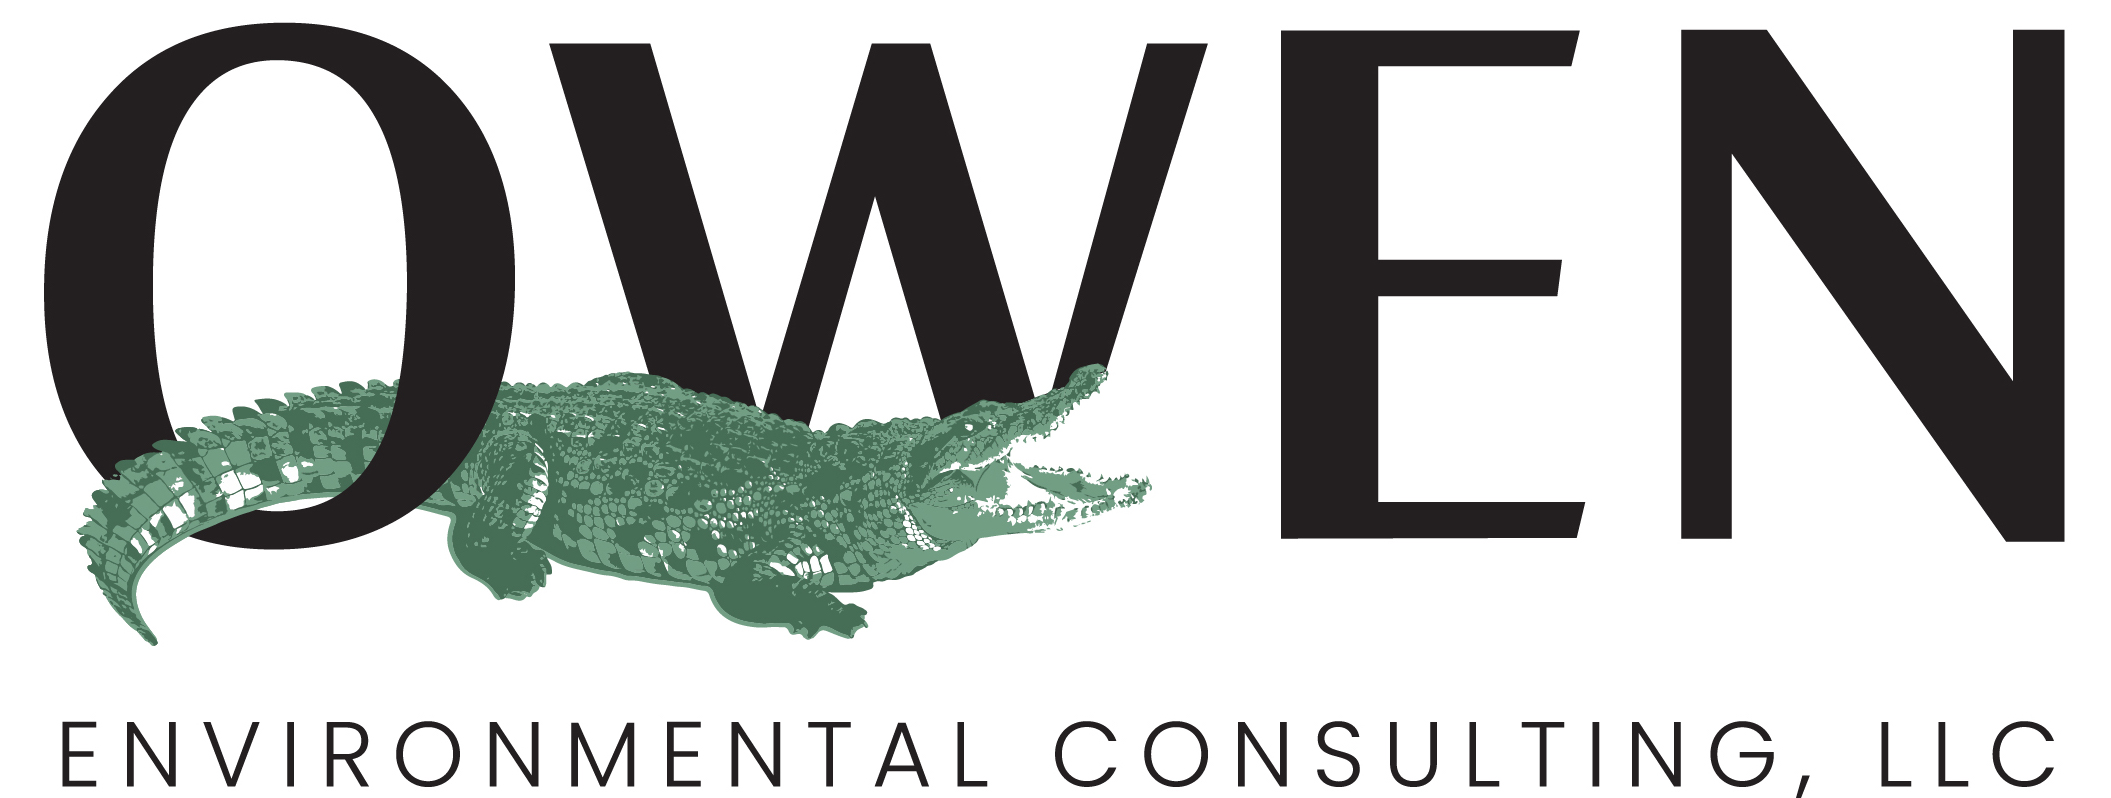 Final Letter head LOGO Owen Environmental Consulting, LLC-02.jpeg